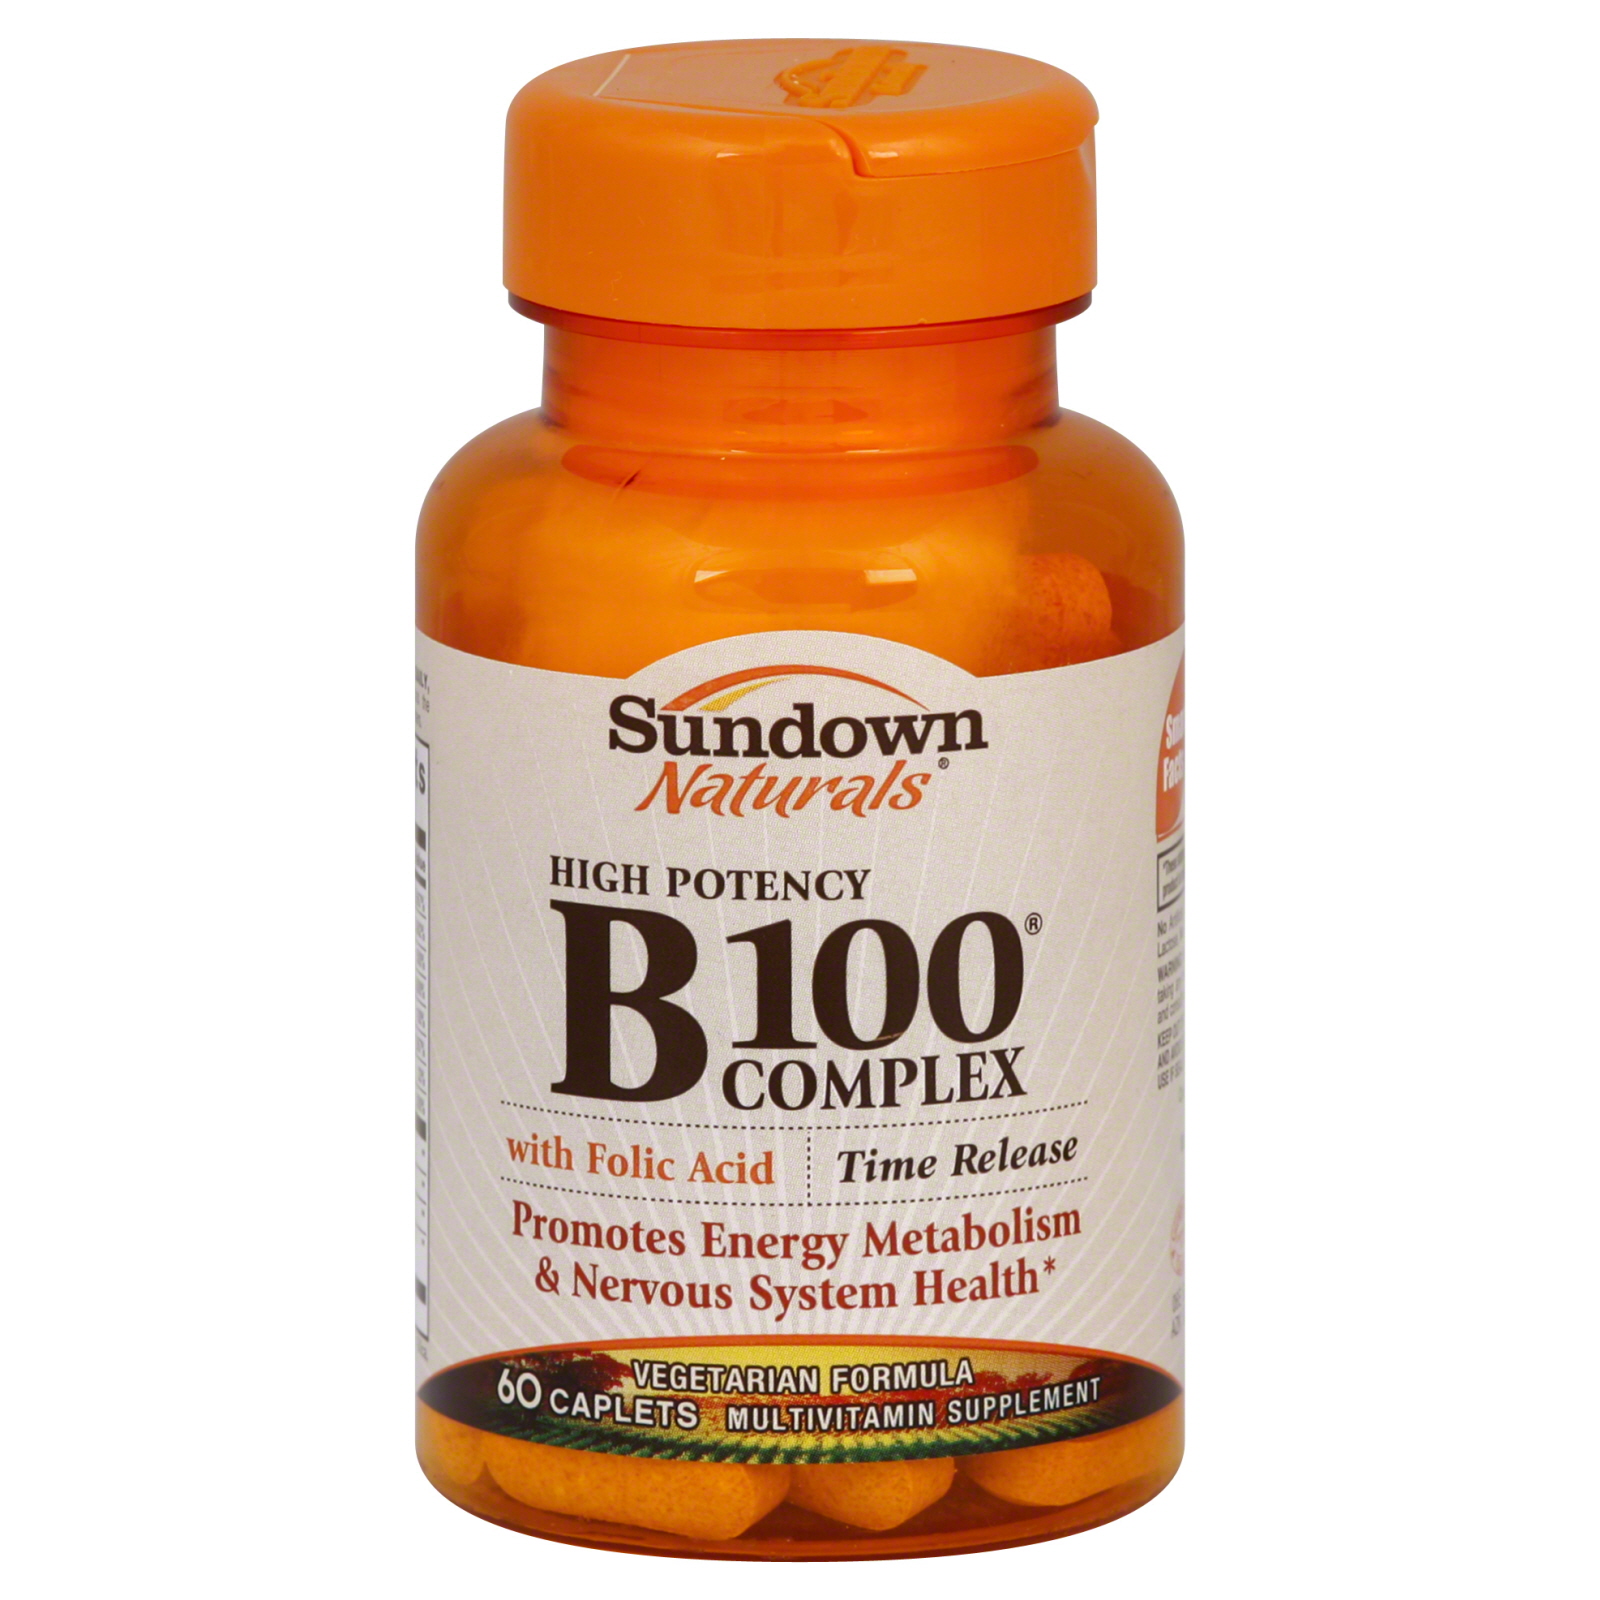 Sundown Naturals Vitamin B 100 Complex, High Potency, with Folic Acid, Caplets, 60 caplets